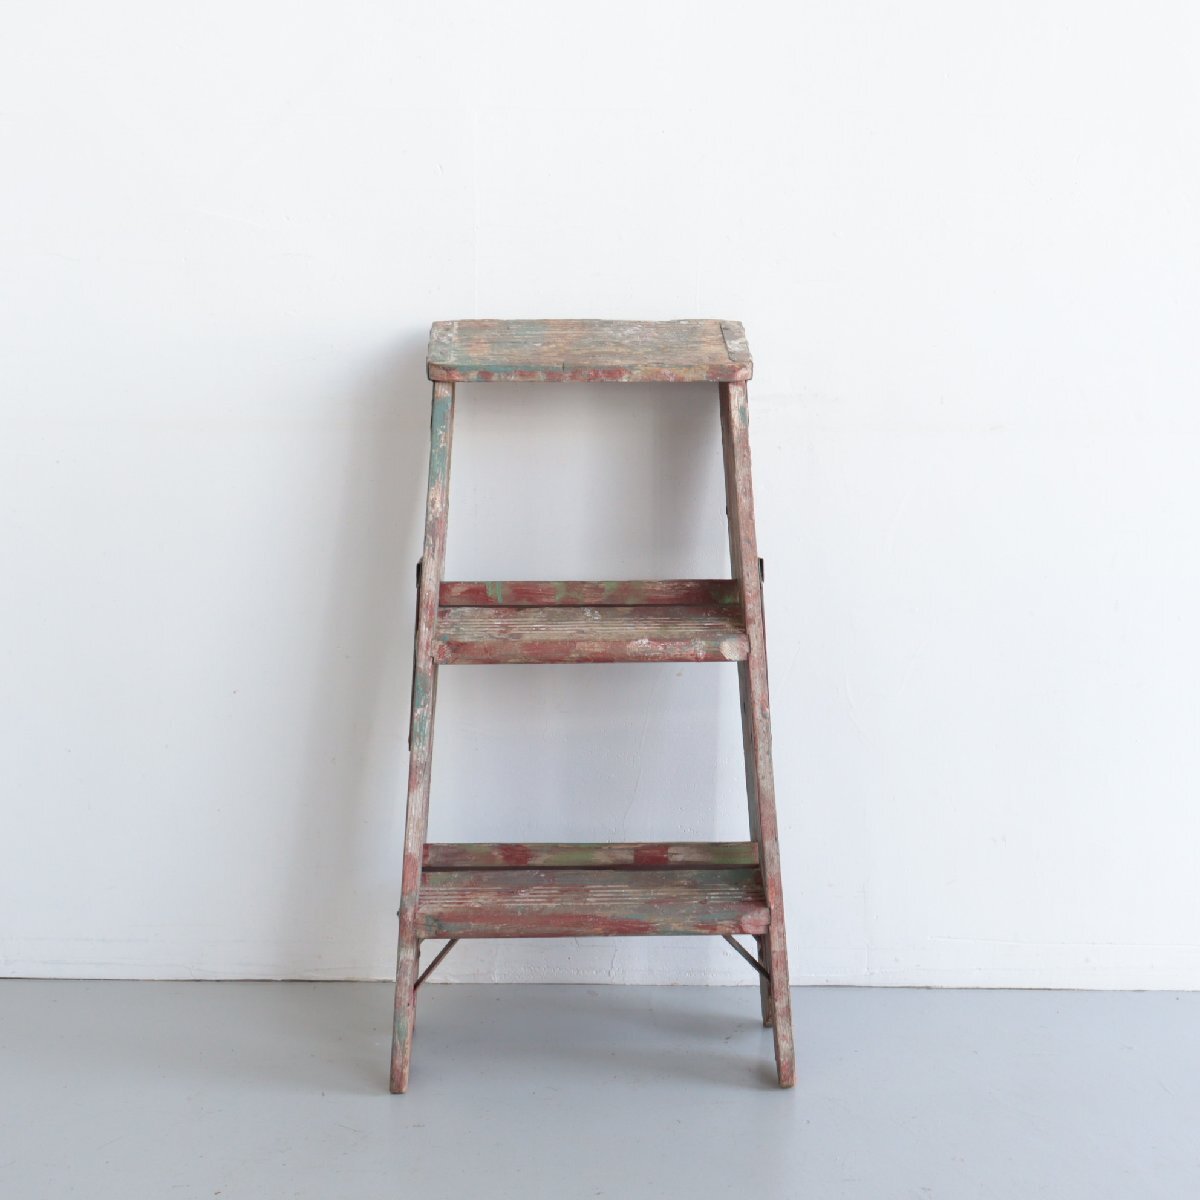  Vintage 3 step stepladder / America wooden ladder ladder display store furniture gardening antique paint paint #502-58-133